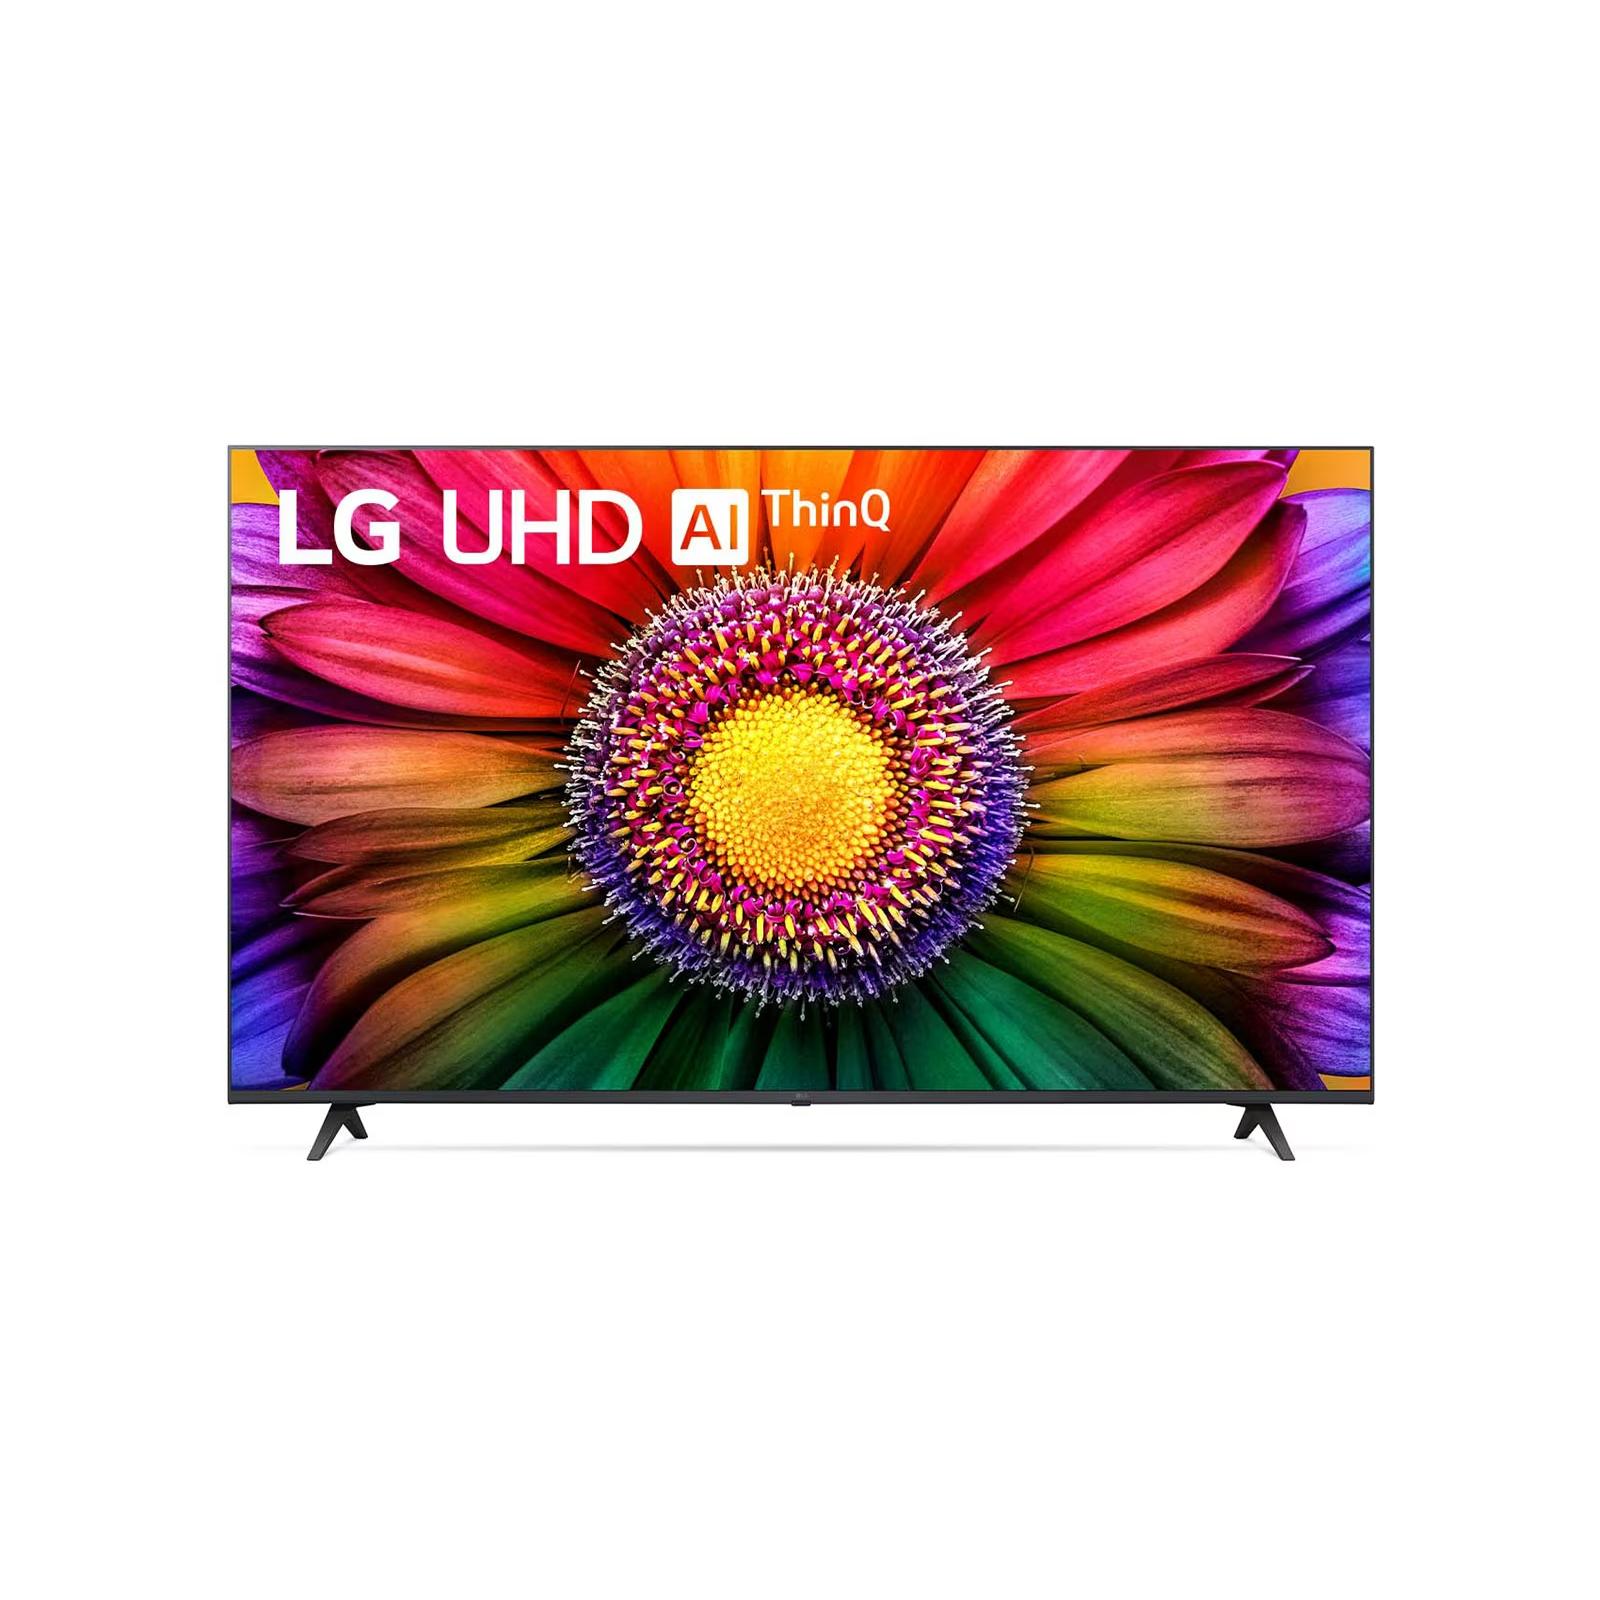 TV LG Smart 55UJ6580 LED 55 webOS 3.5 UHD 4K 3840 X 2160 USB HDMI